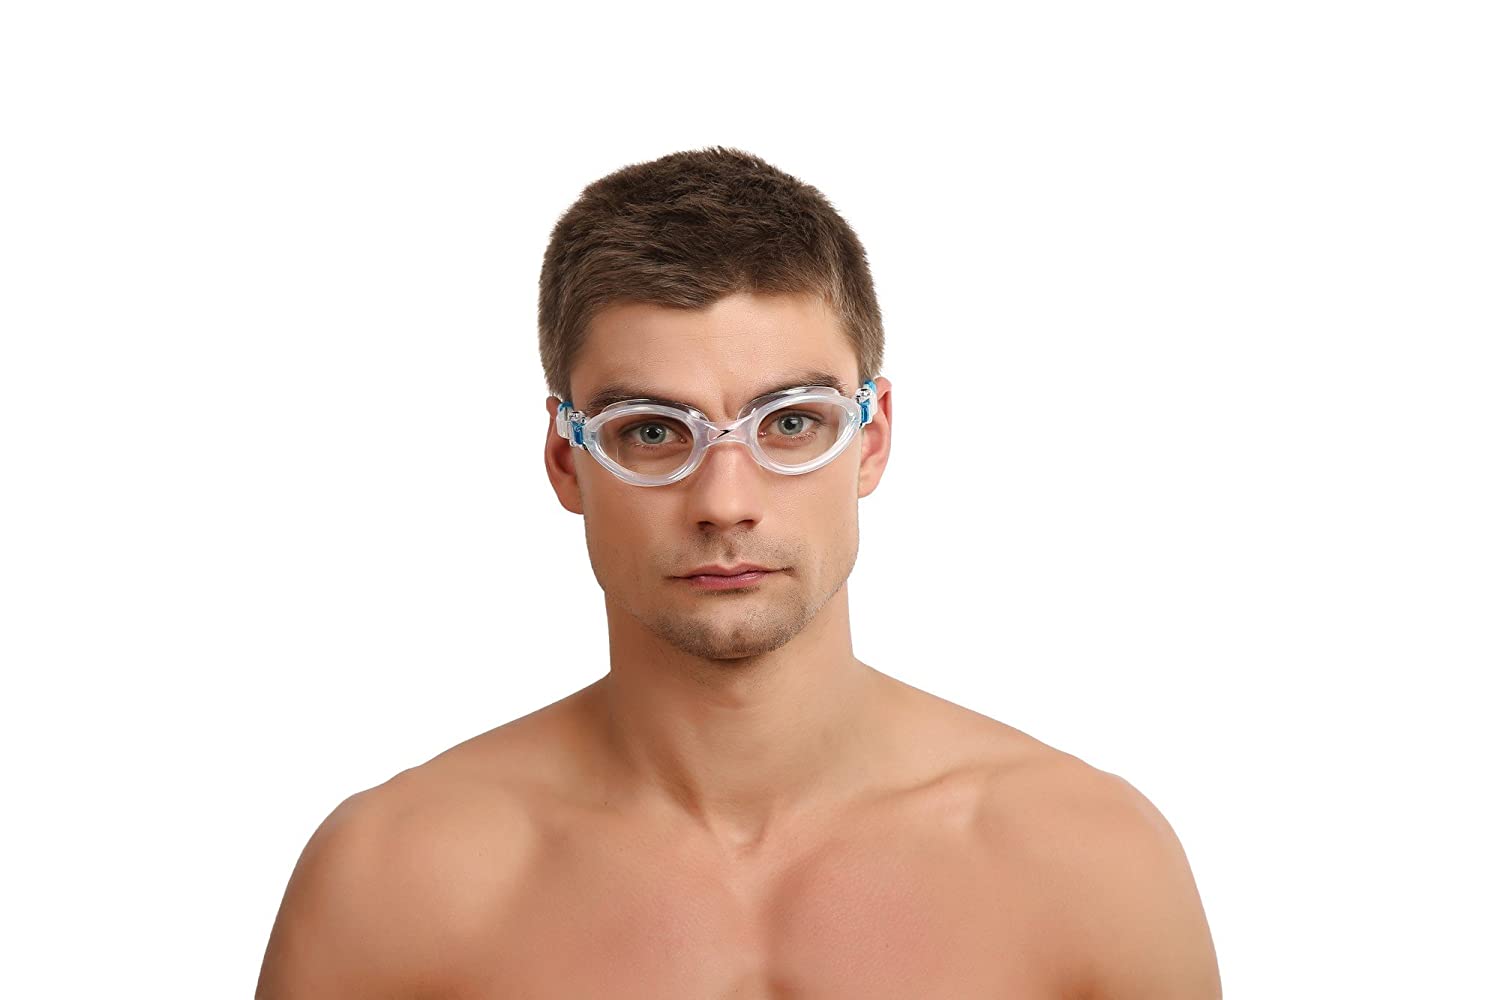 Speedo Futura One Goggles (Clear) - Best Price online Prokicksports.com